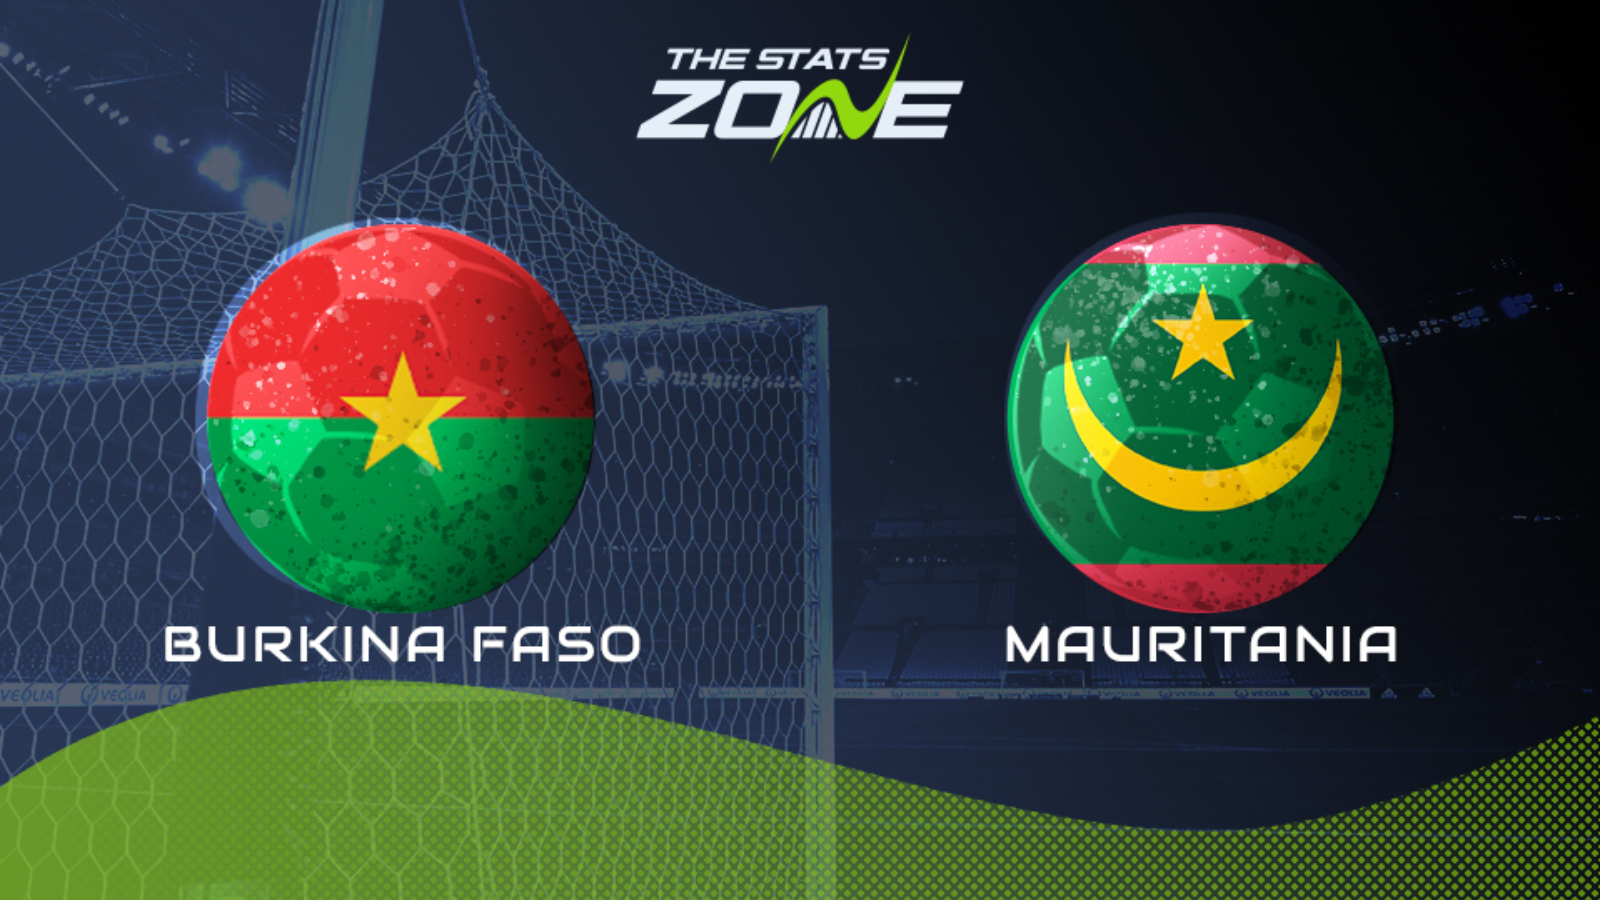 Mauritania vs burkina faso